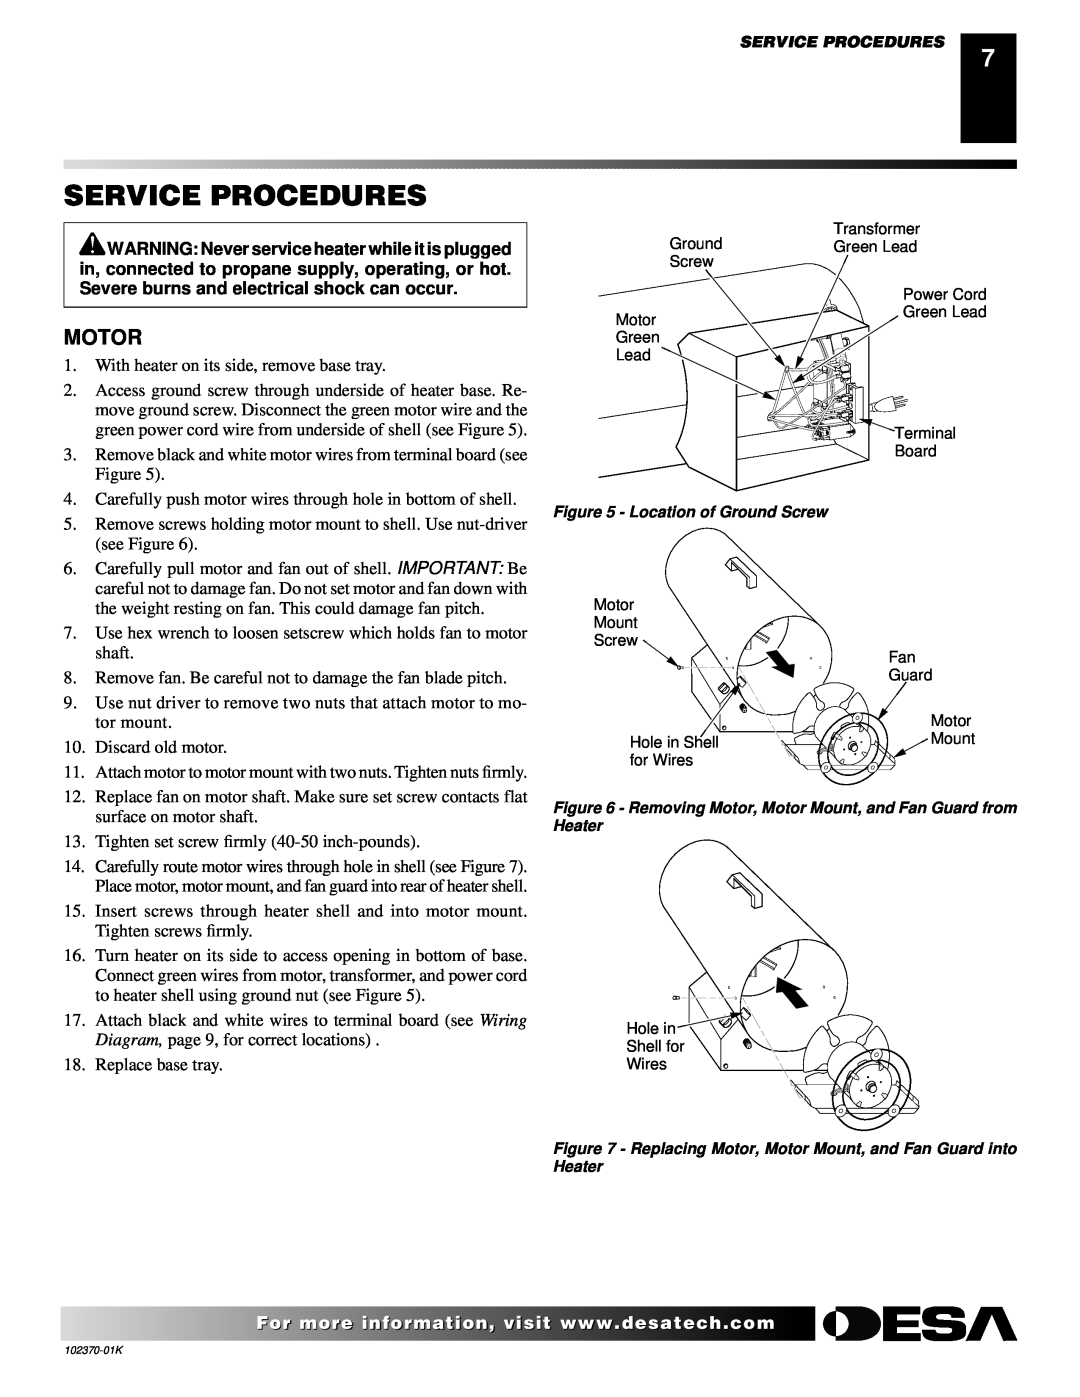 Desa BLP100, REM100LP owner manual Service Procedures, Motor 